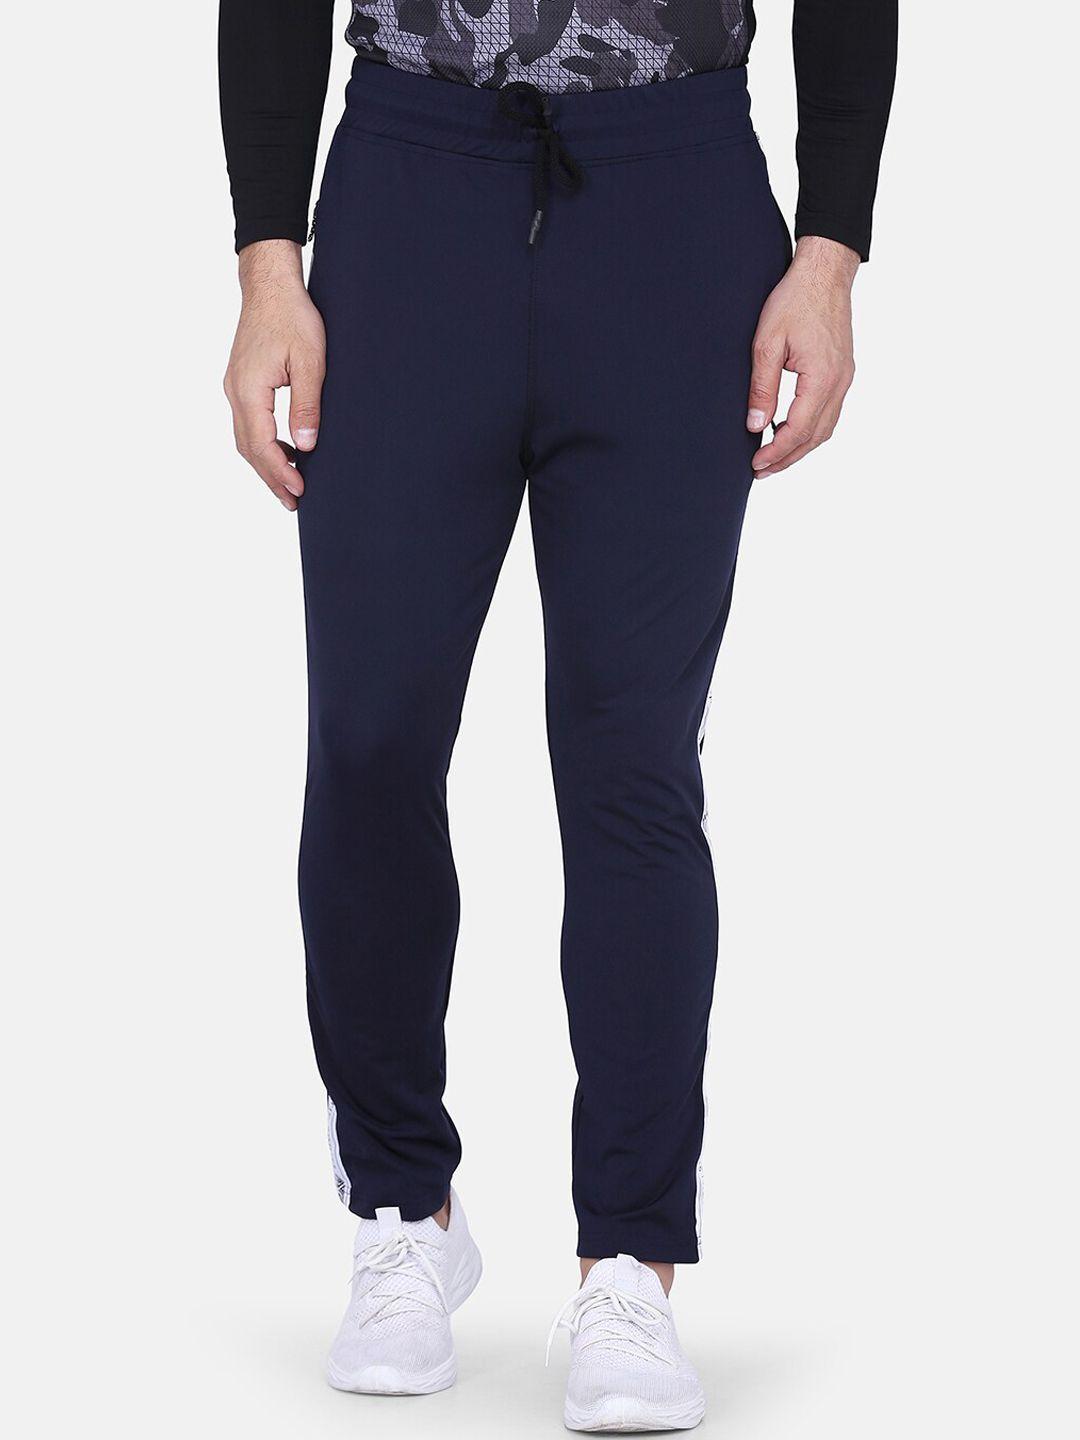 aesthetic bodies men navy blue solid slim-fit track pants